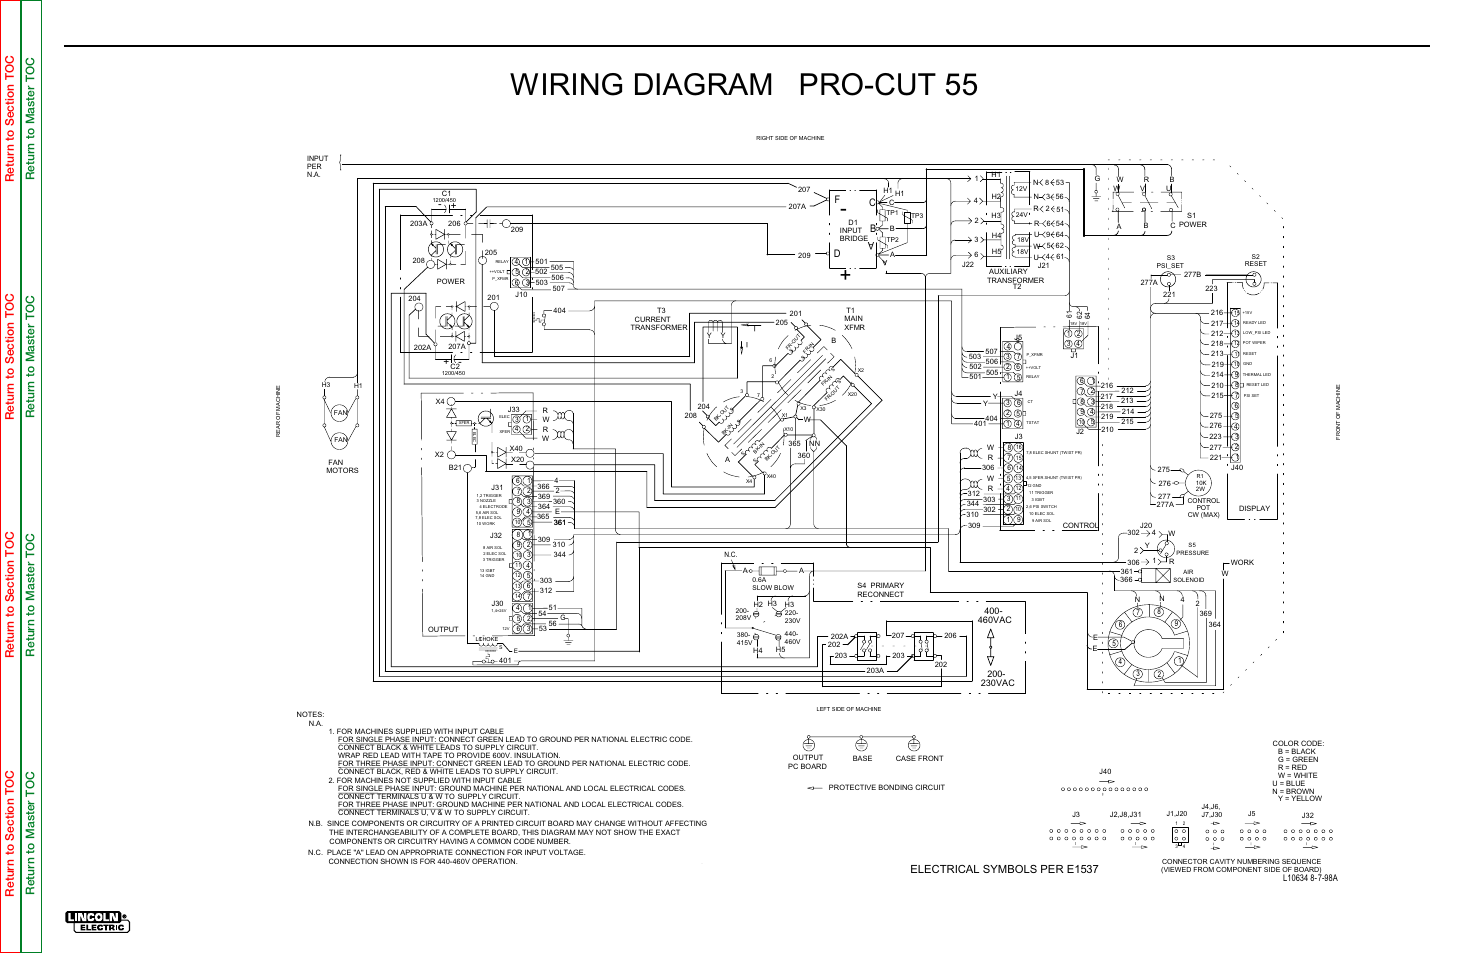 Wiring diagram pro-cut 55, Electrical diagrams, Wiring diagram - entire machine ...1475 x 954